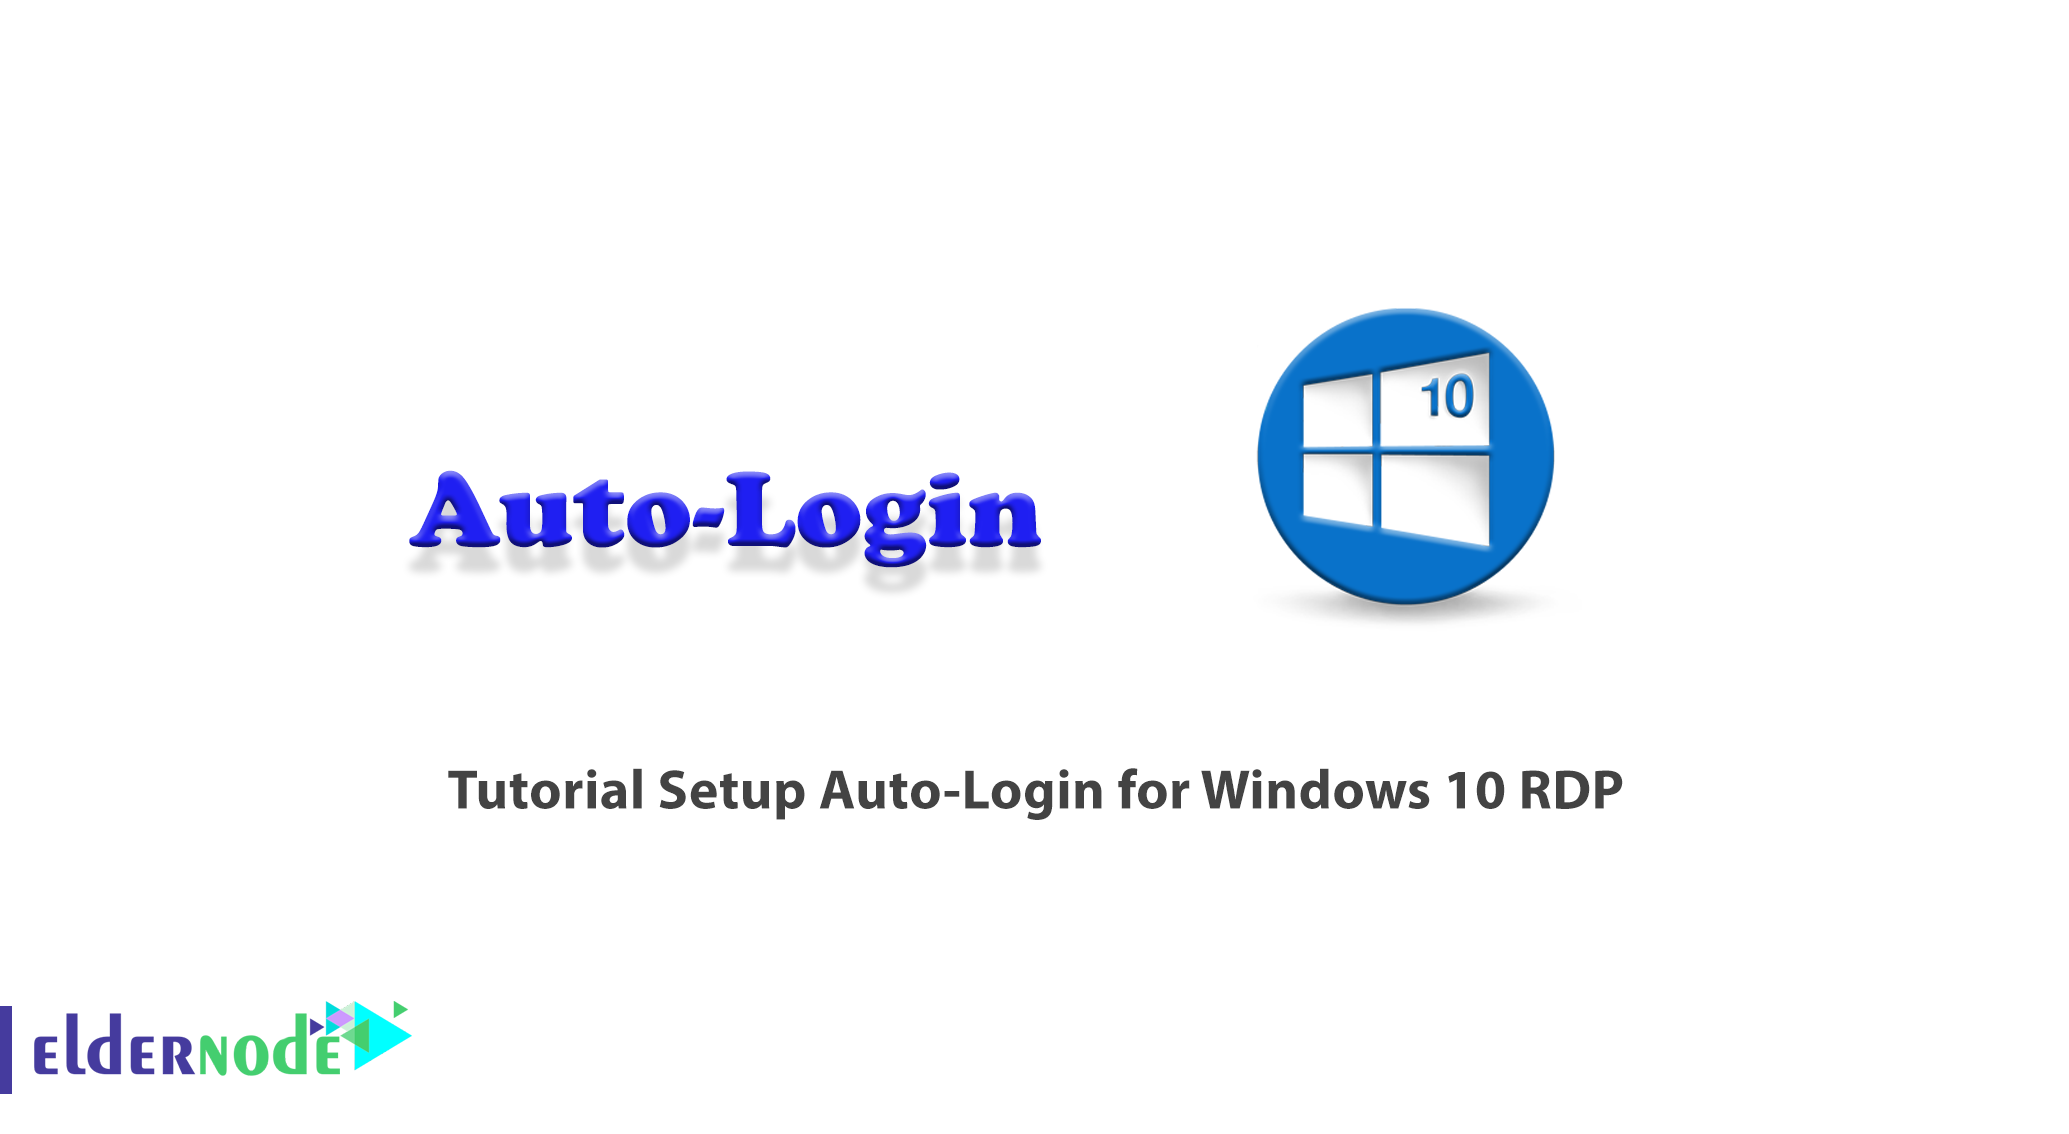 Tutorial Setup Auto-Login for Windows 10 RDP